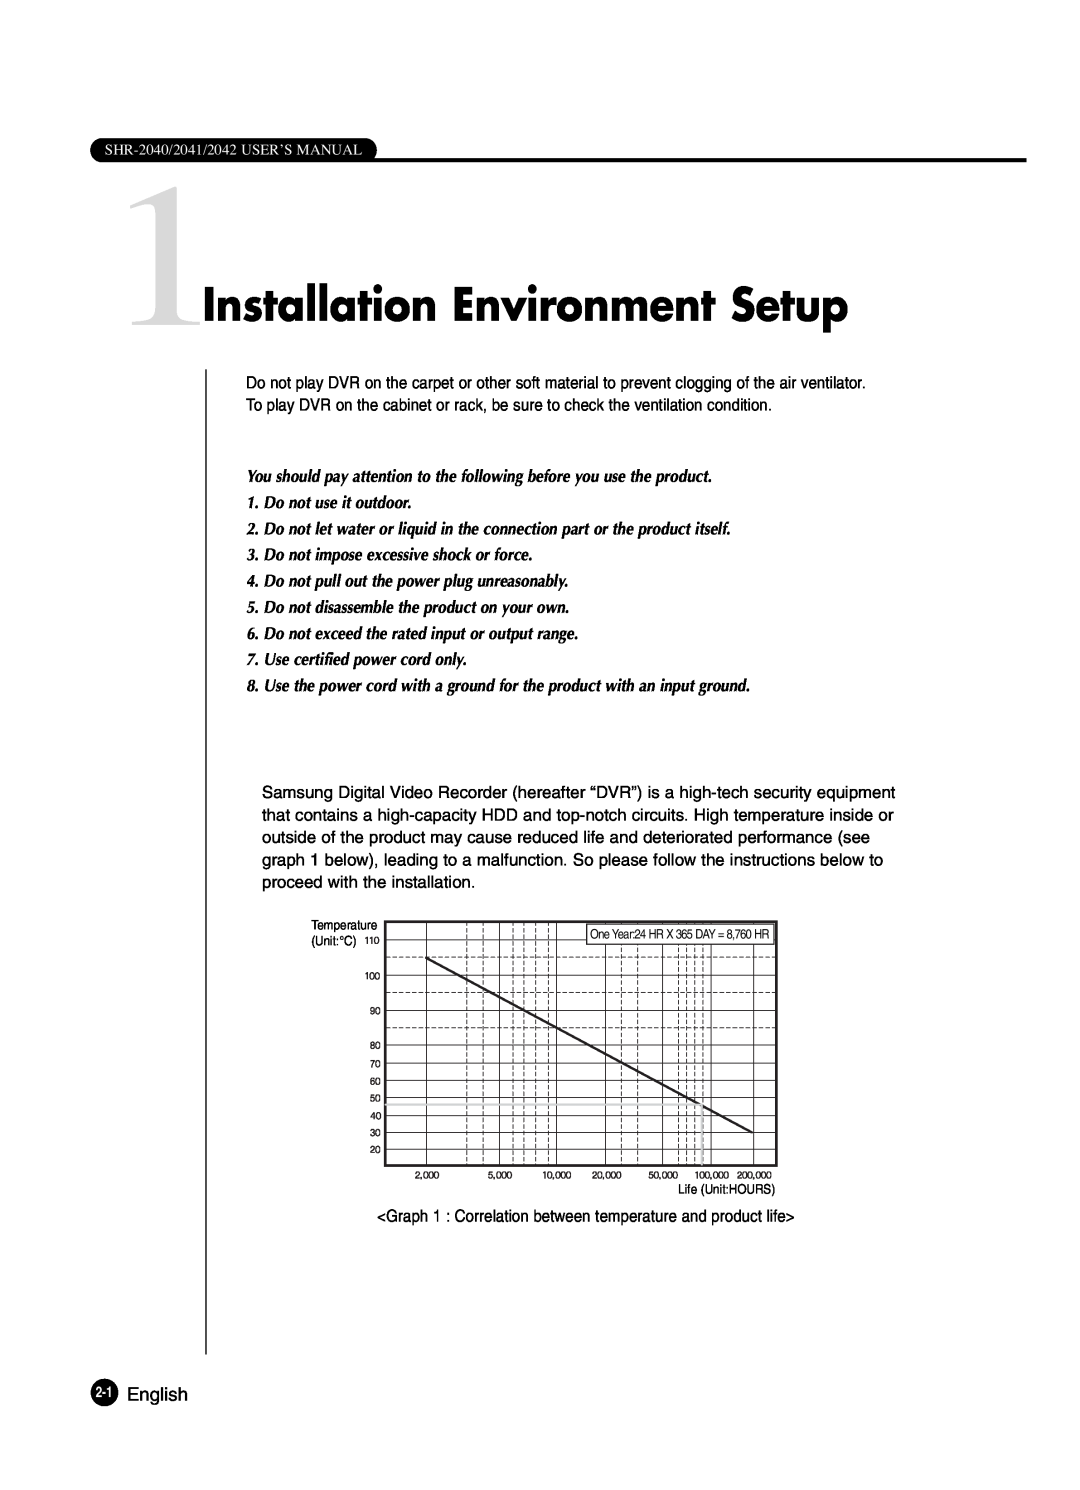 Samsung SHR-2042P250, SHR-2040P250 manual 1Installation Environment Setup, English 